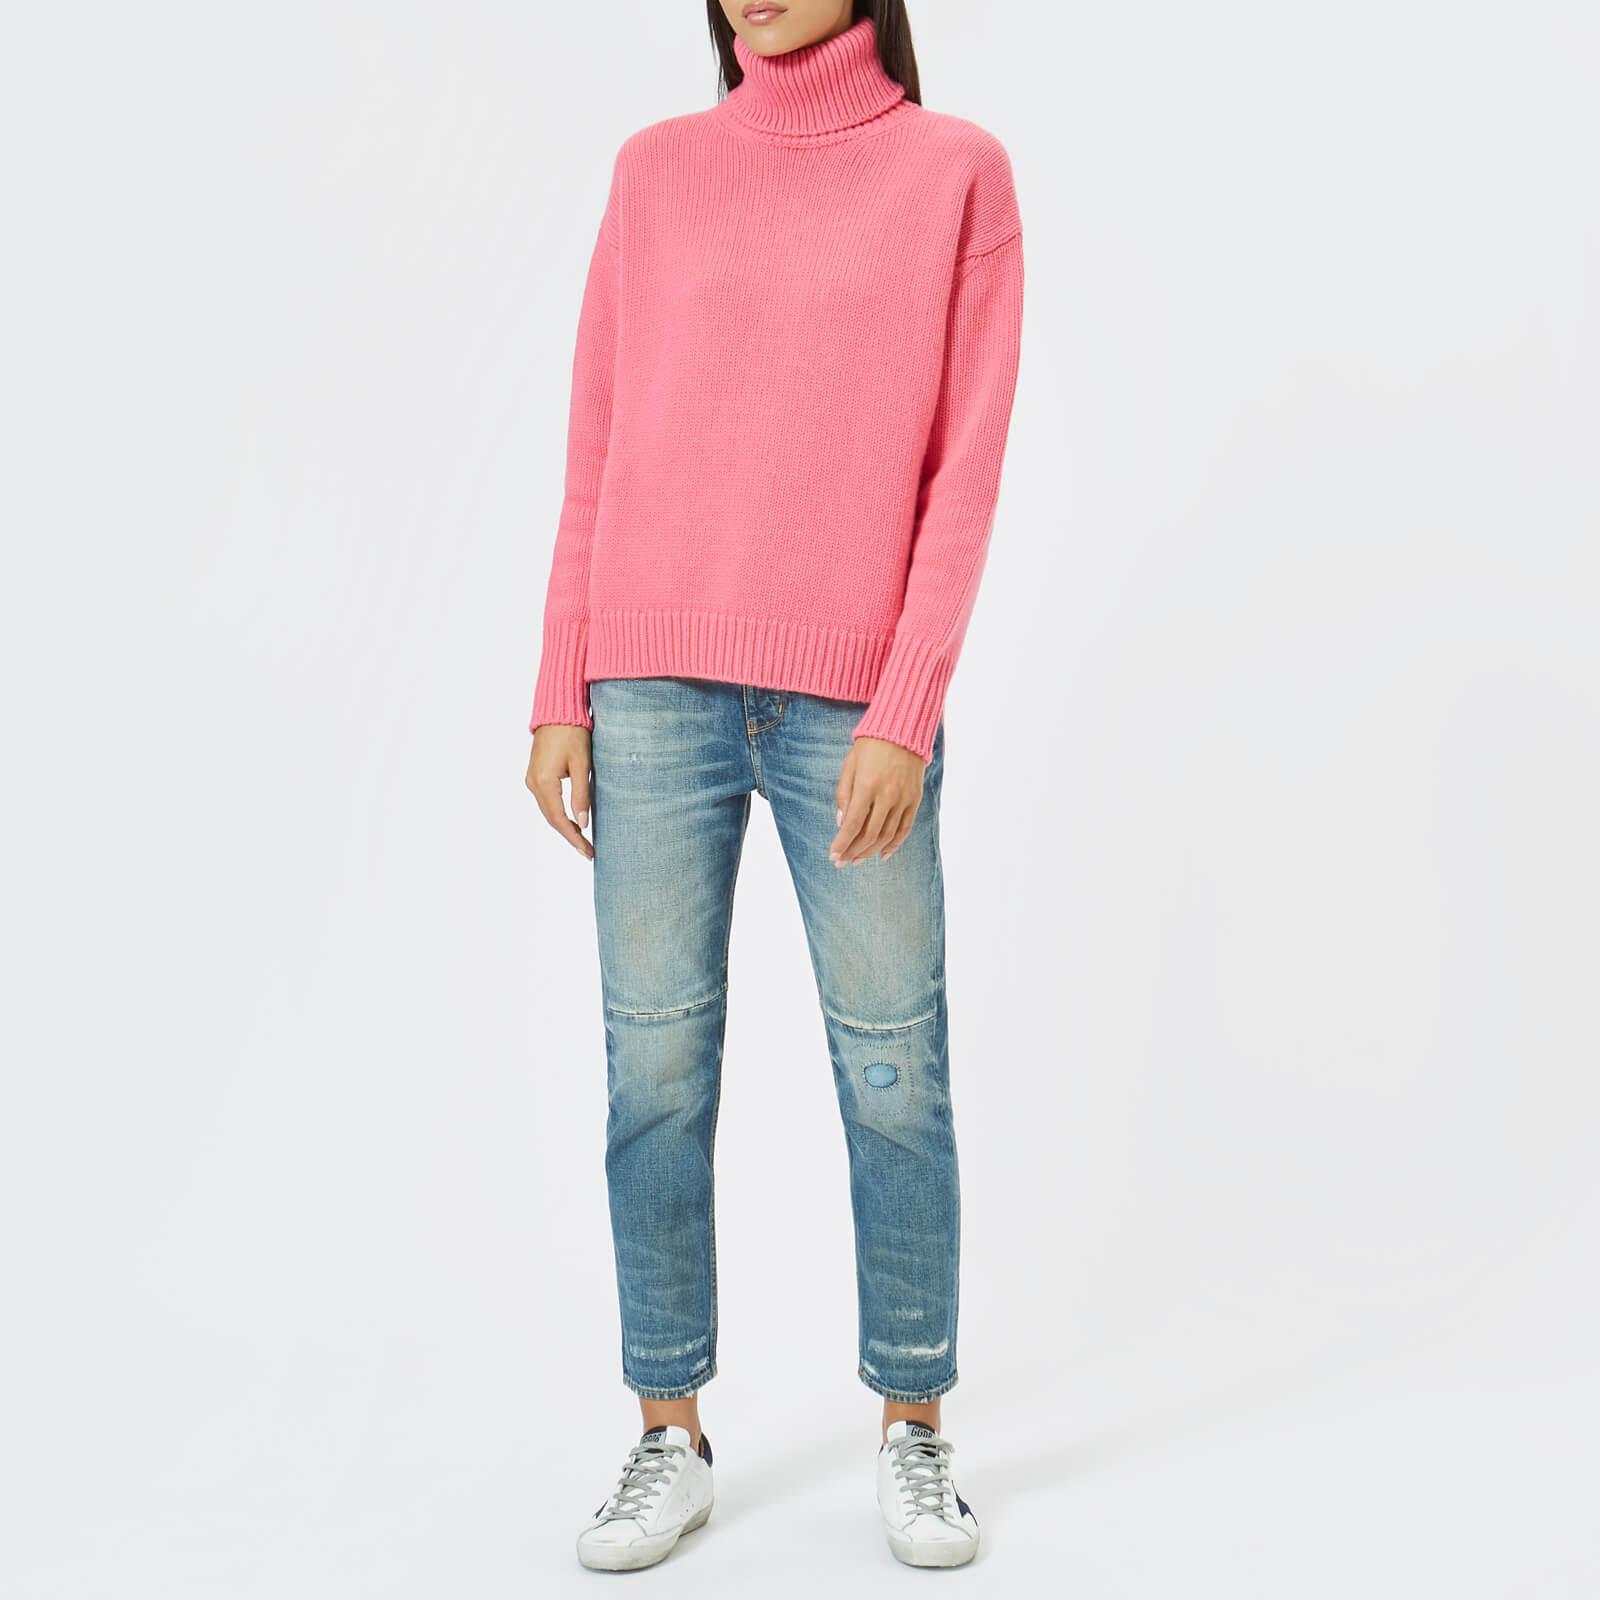 Lyst - Golden Goose Deluxe Brand Joana Sweater in Pink